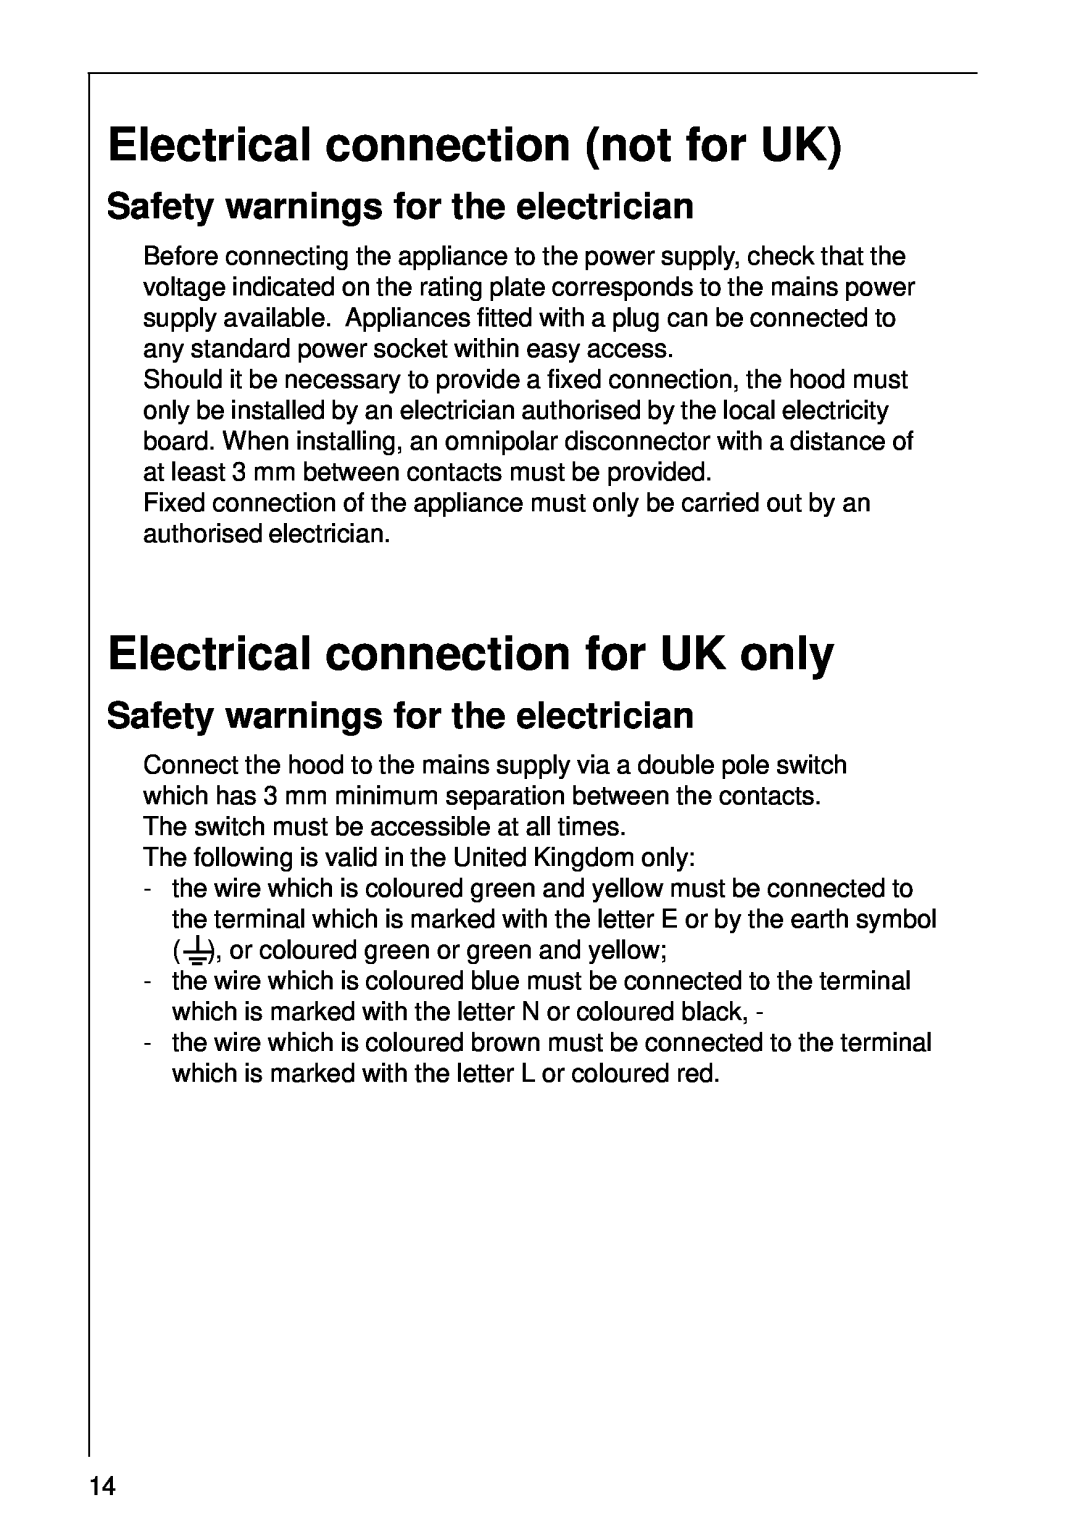 Electrolux DL 6250, 5708 D, CHDL 4150, 570 D Electrical connection not for UK, Electrical connection for UK only 